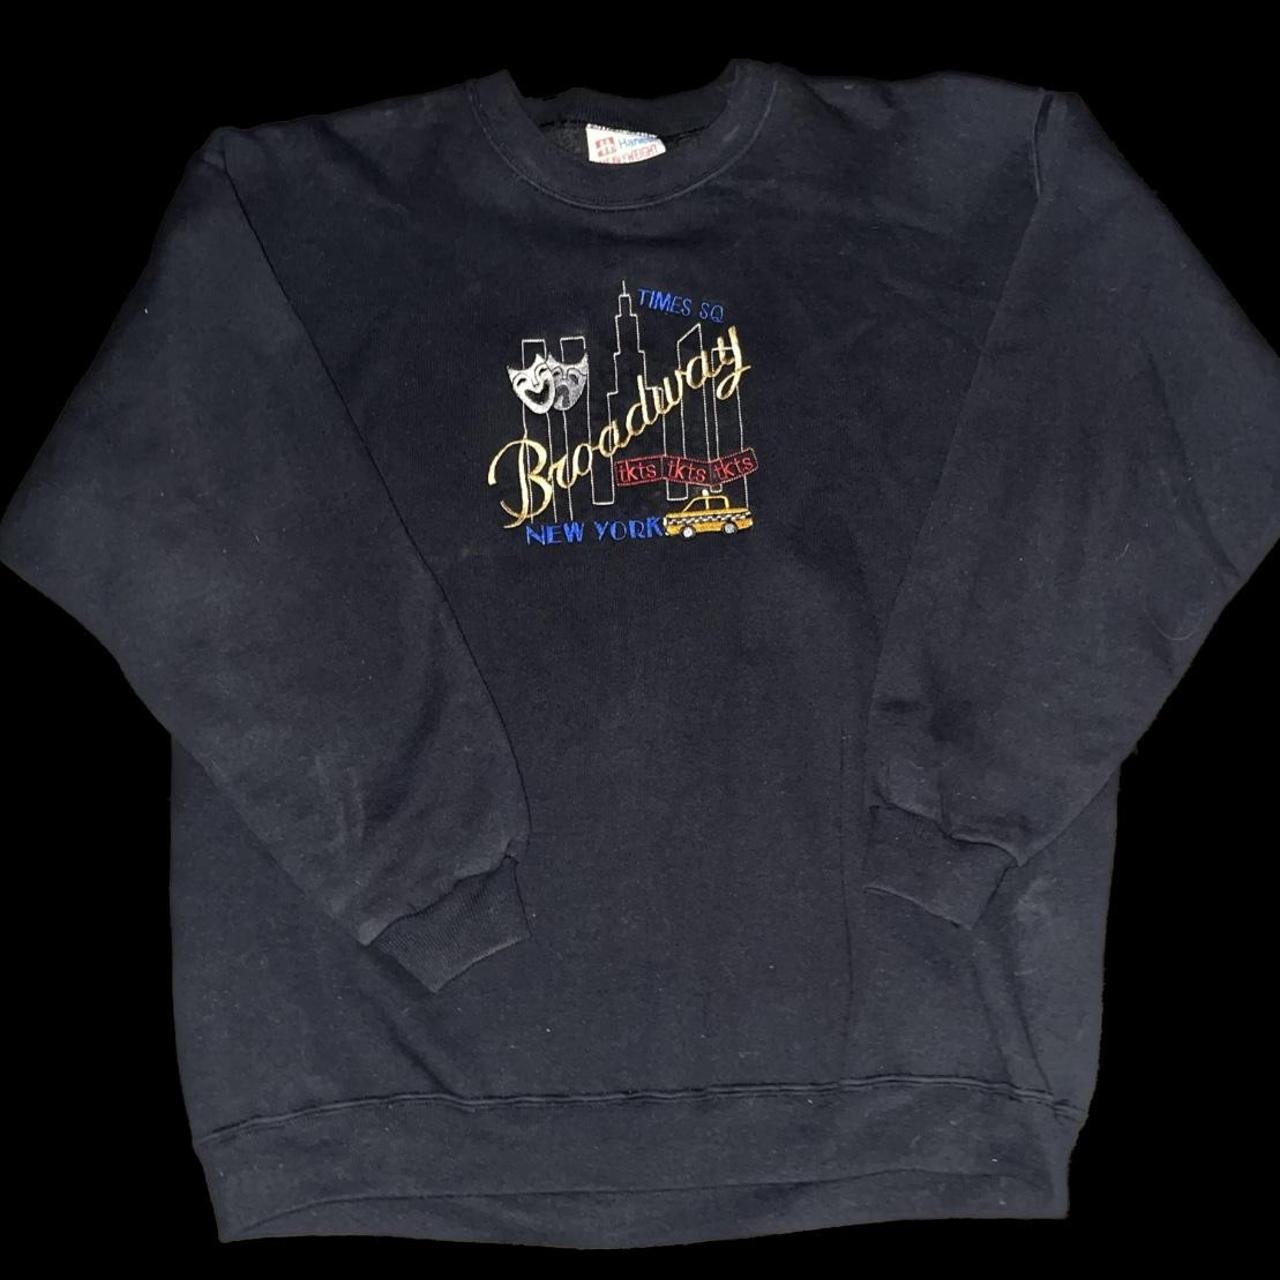 Vintage Broadway New York Sweatshirt